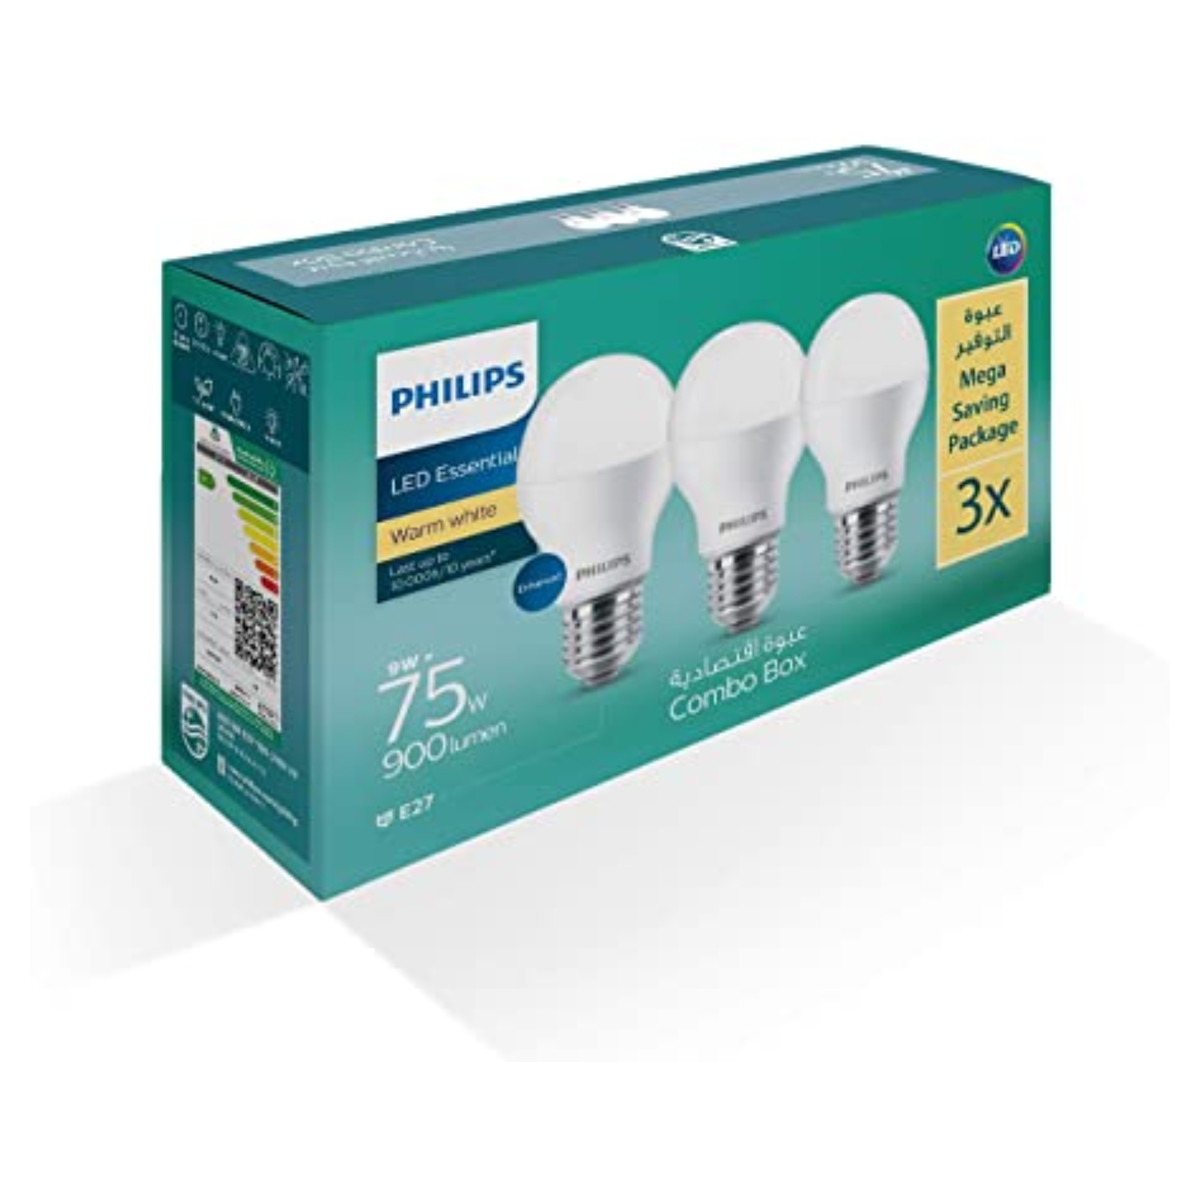 Philips Essential  9W E27  LED Bulb 3 Pieces